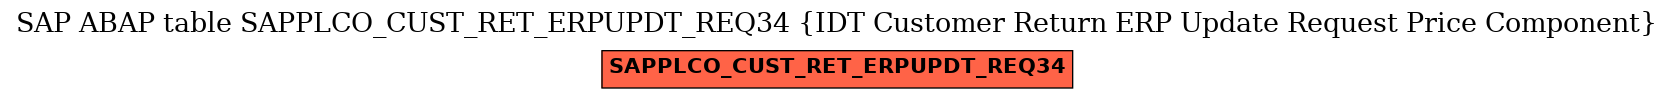 E-R Diagram for table SAPPLCO_CUST_RET_ERPUPDT_REQ34 (IDT Customer Return ERP Update Request Price Component)